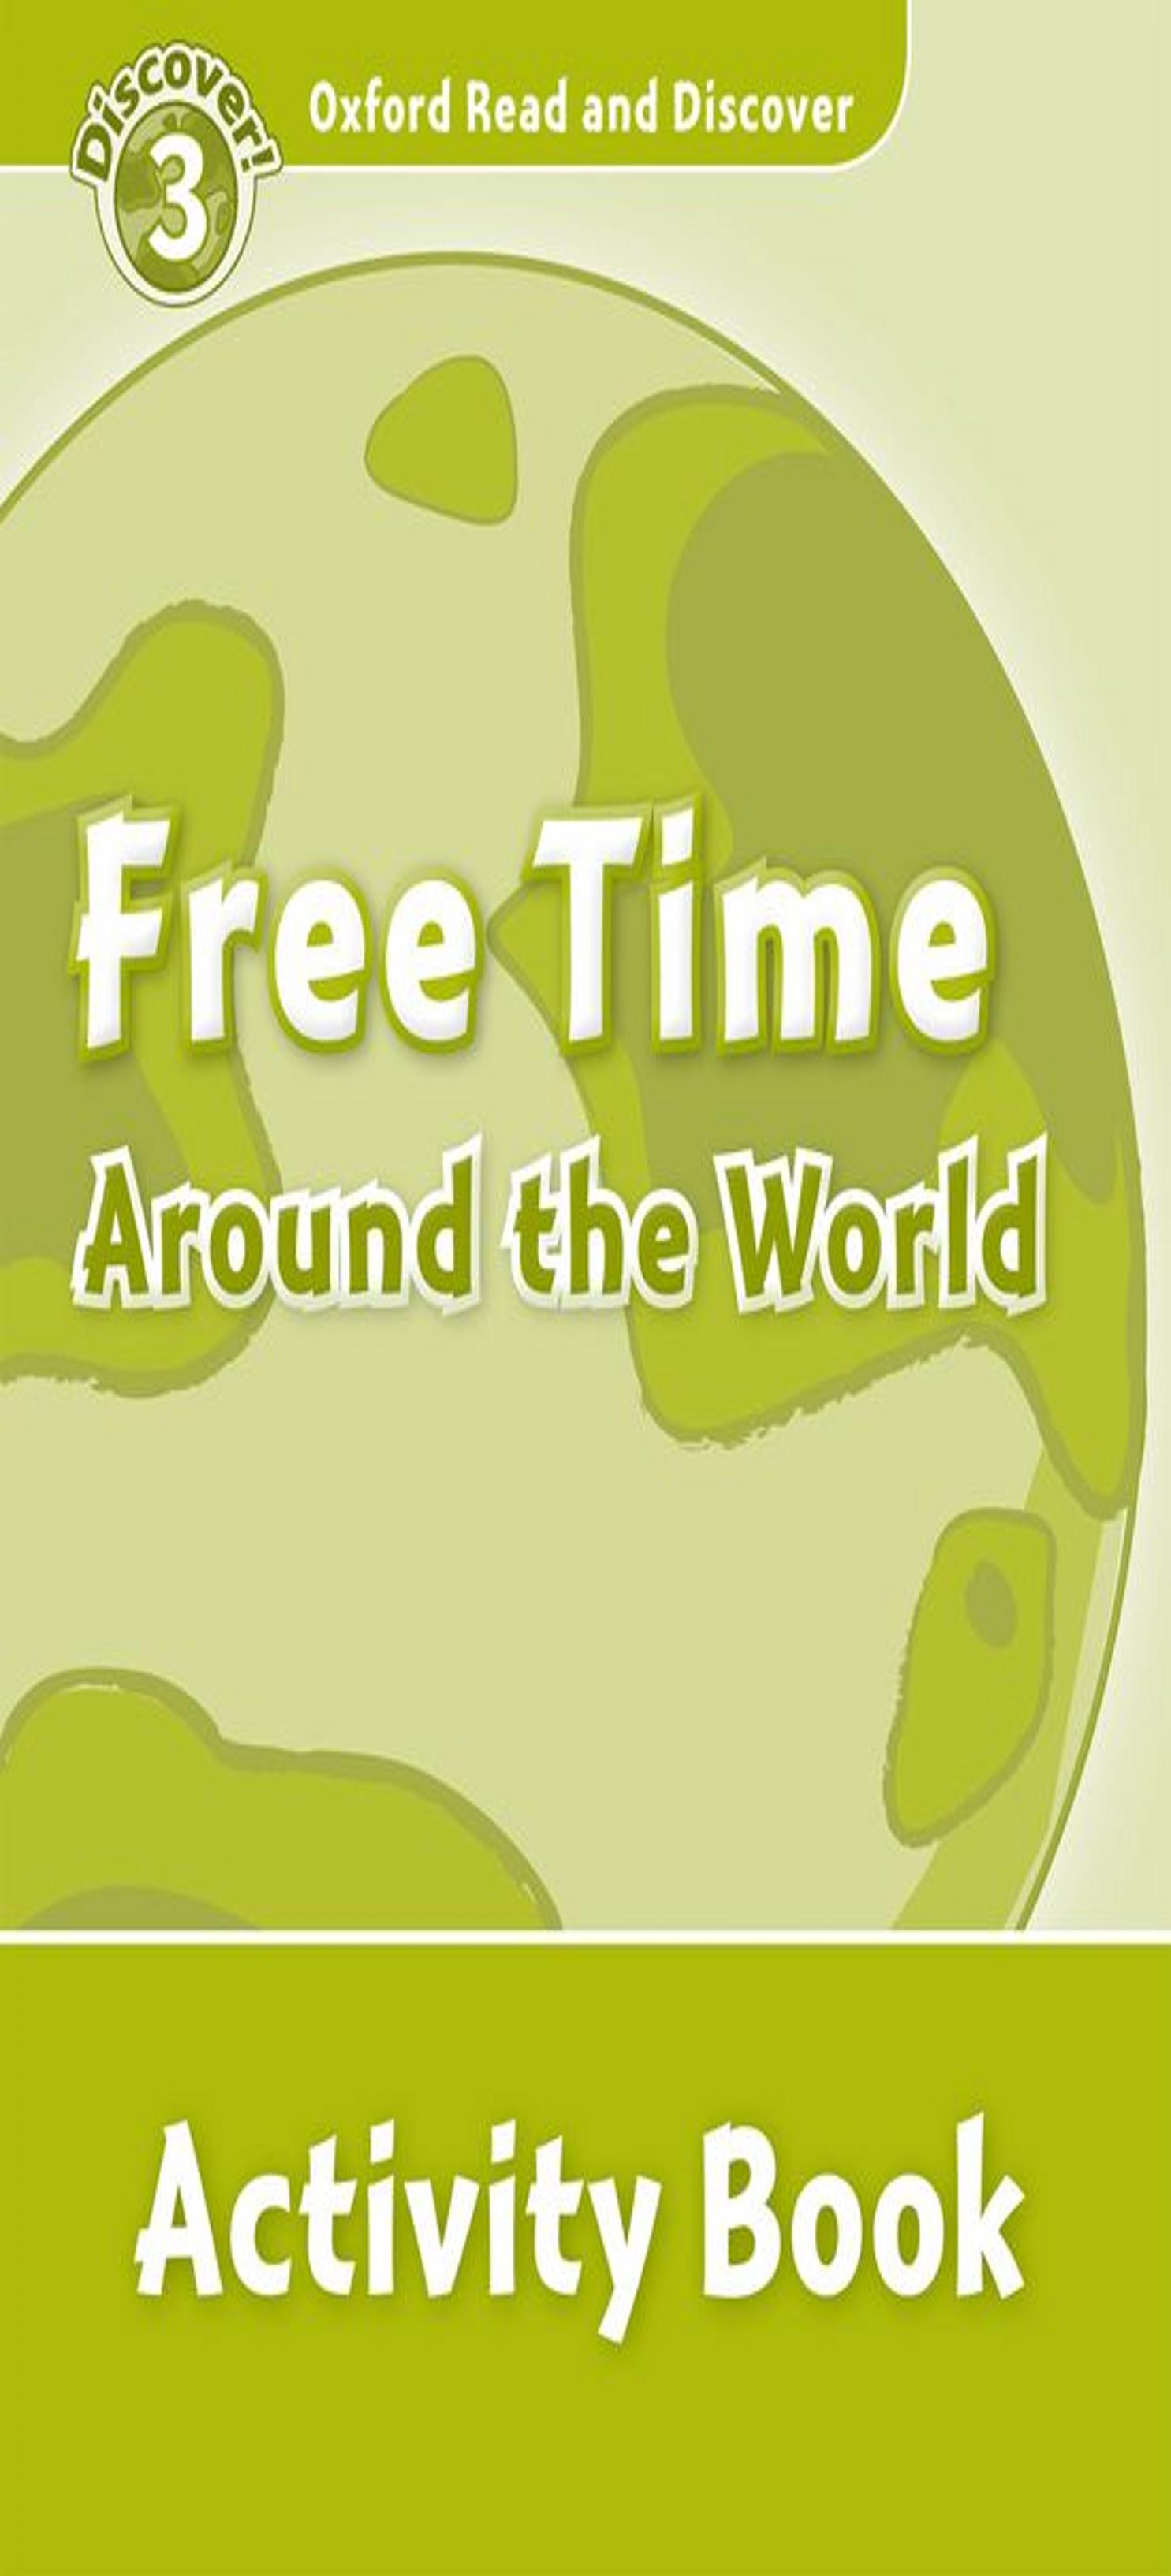 FREE TIME AROUND THE WORLD Activity Book - ORAD 3